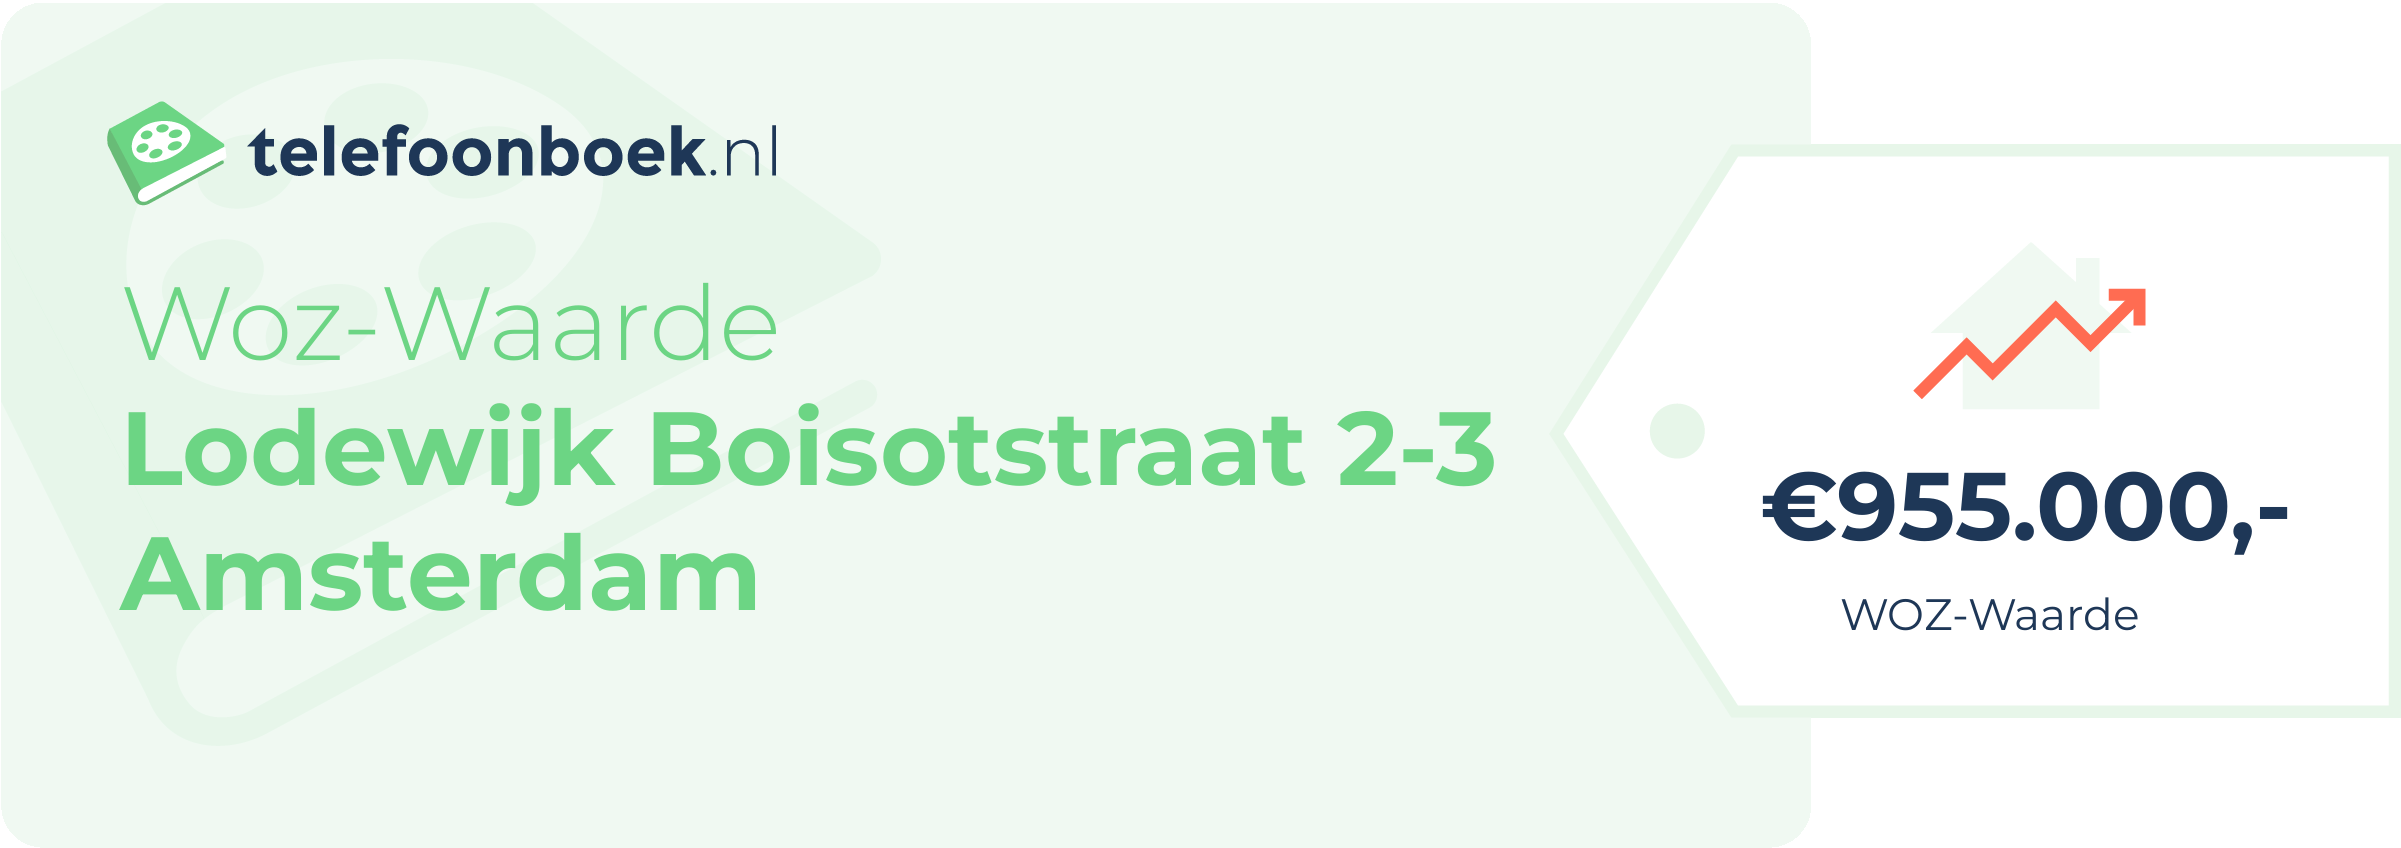 WOZ-waarde Lodewijk Boisotstraat 2-3 Amsterdam